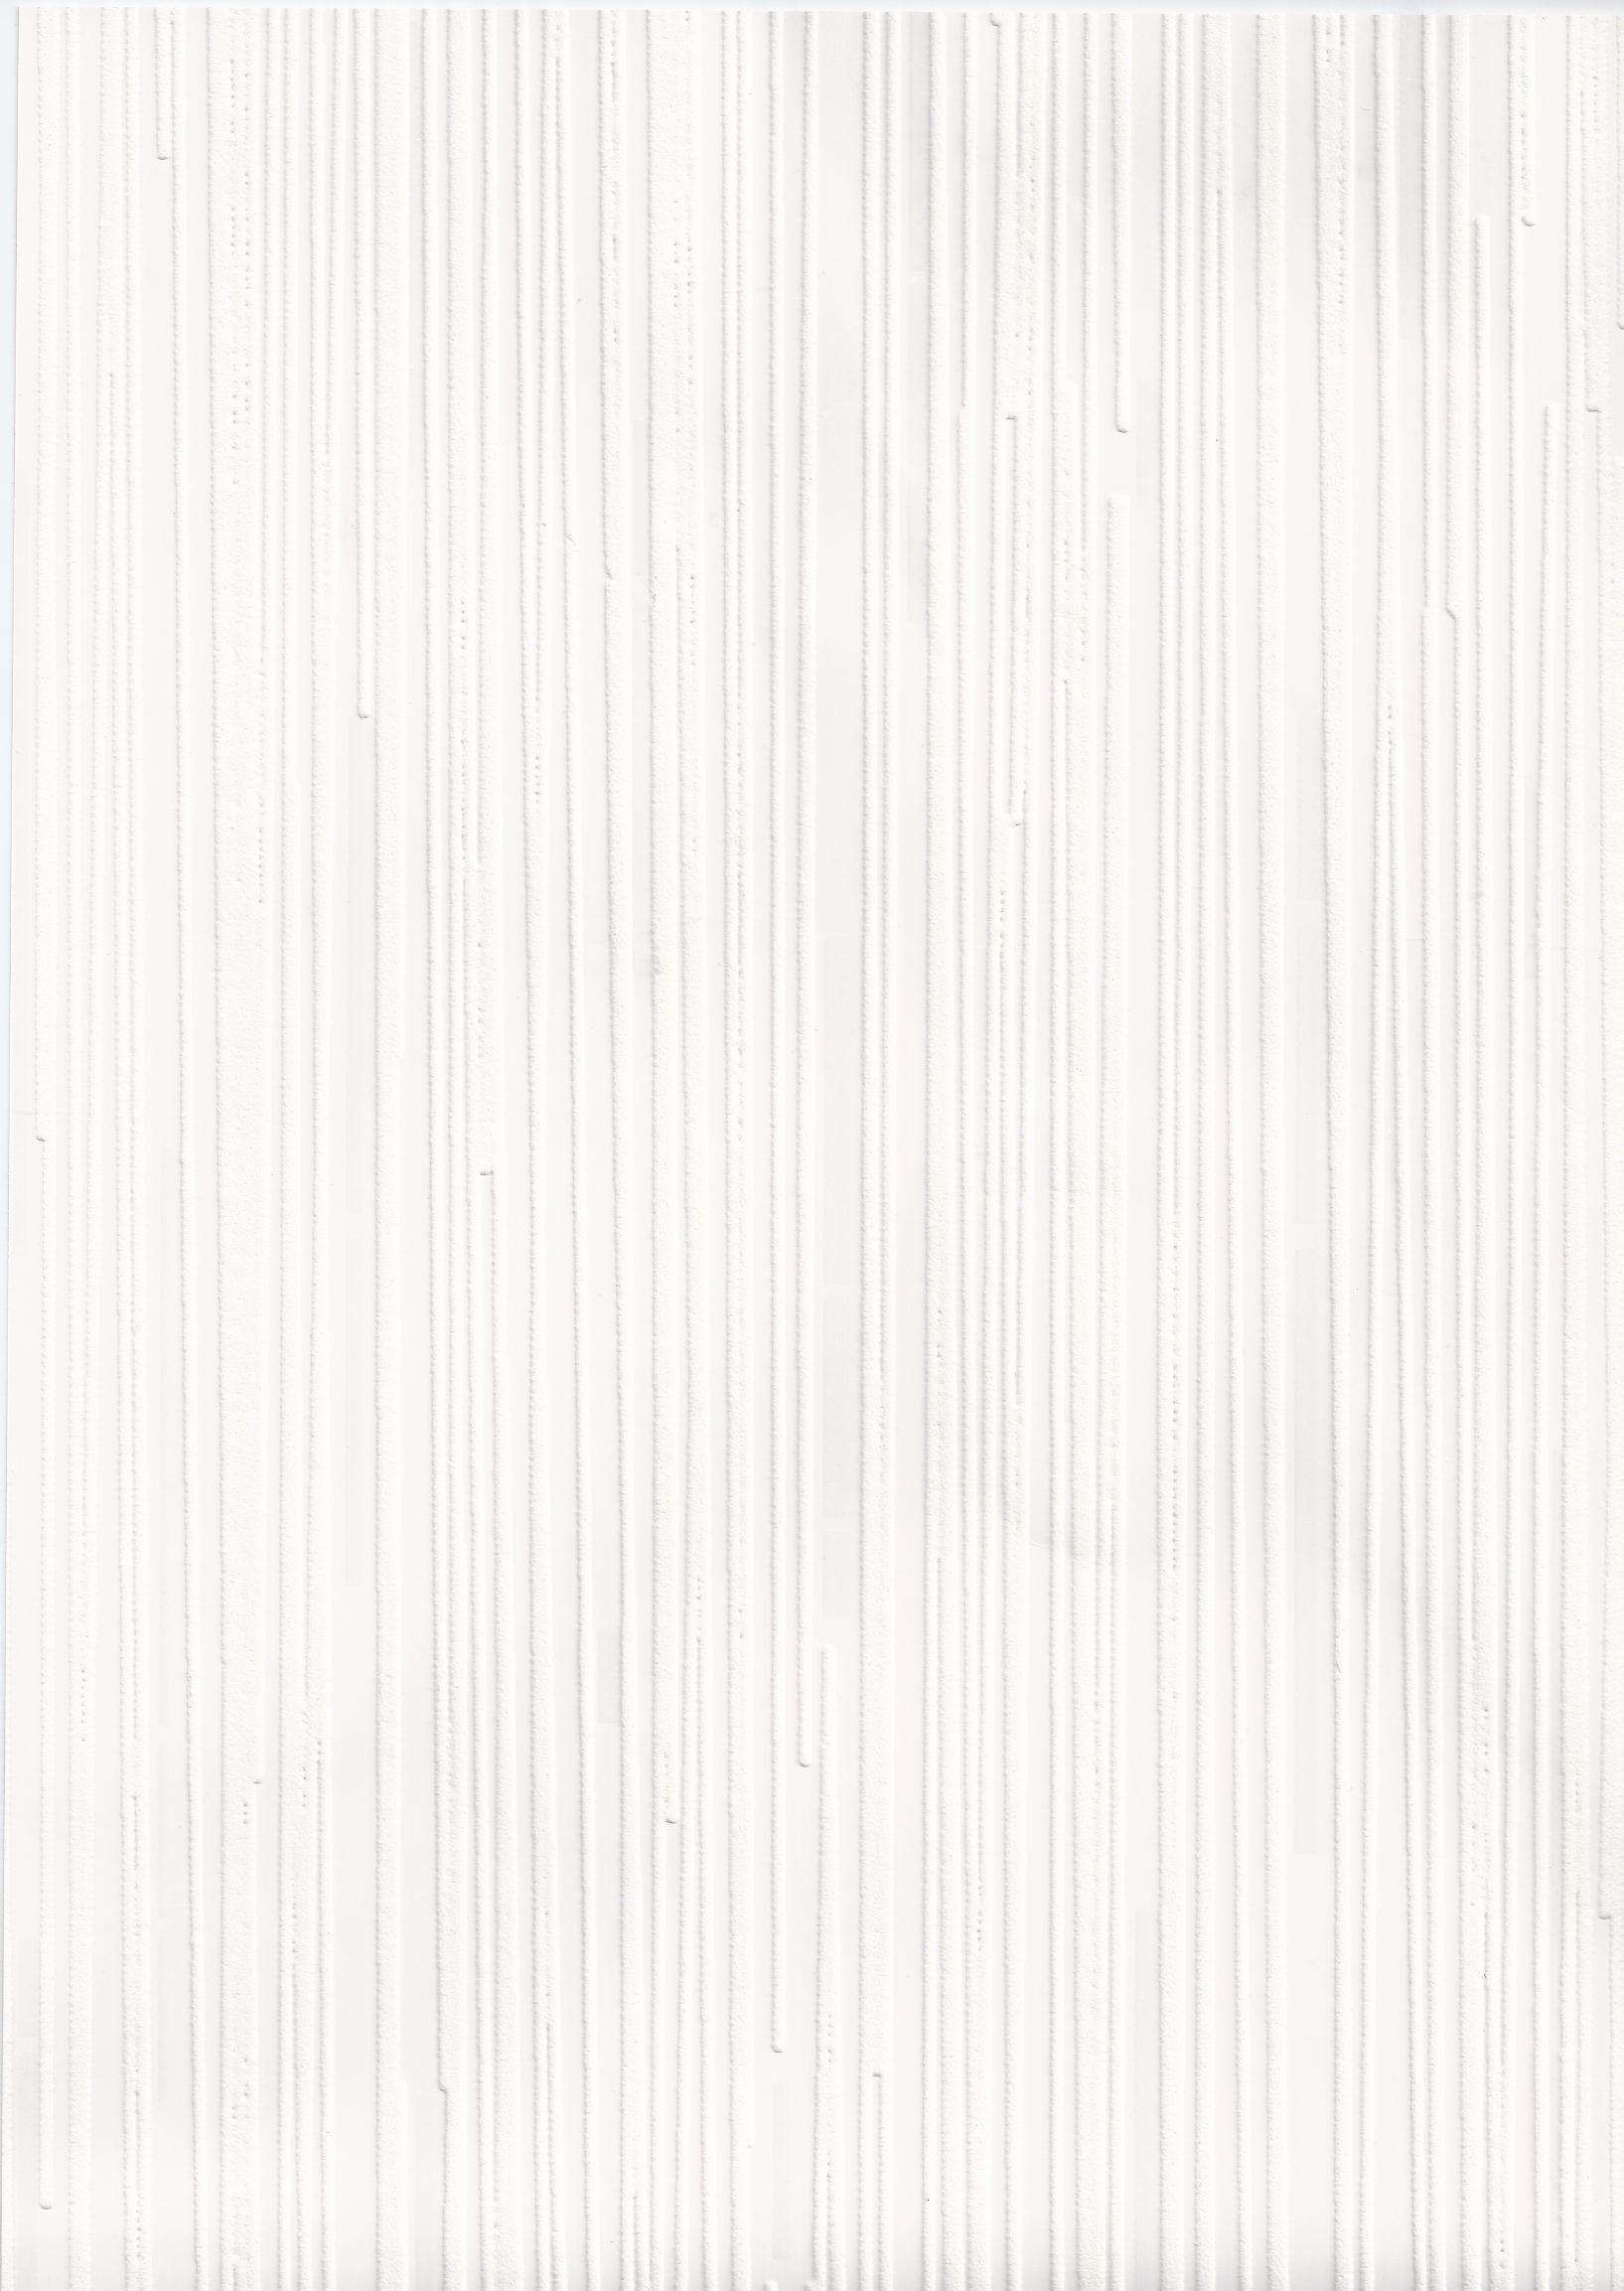 Plain White Wallpaper